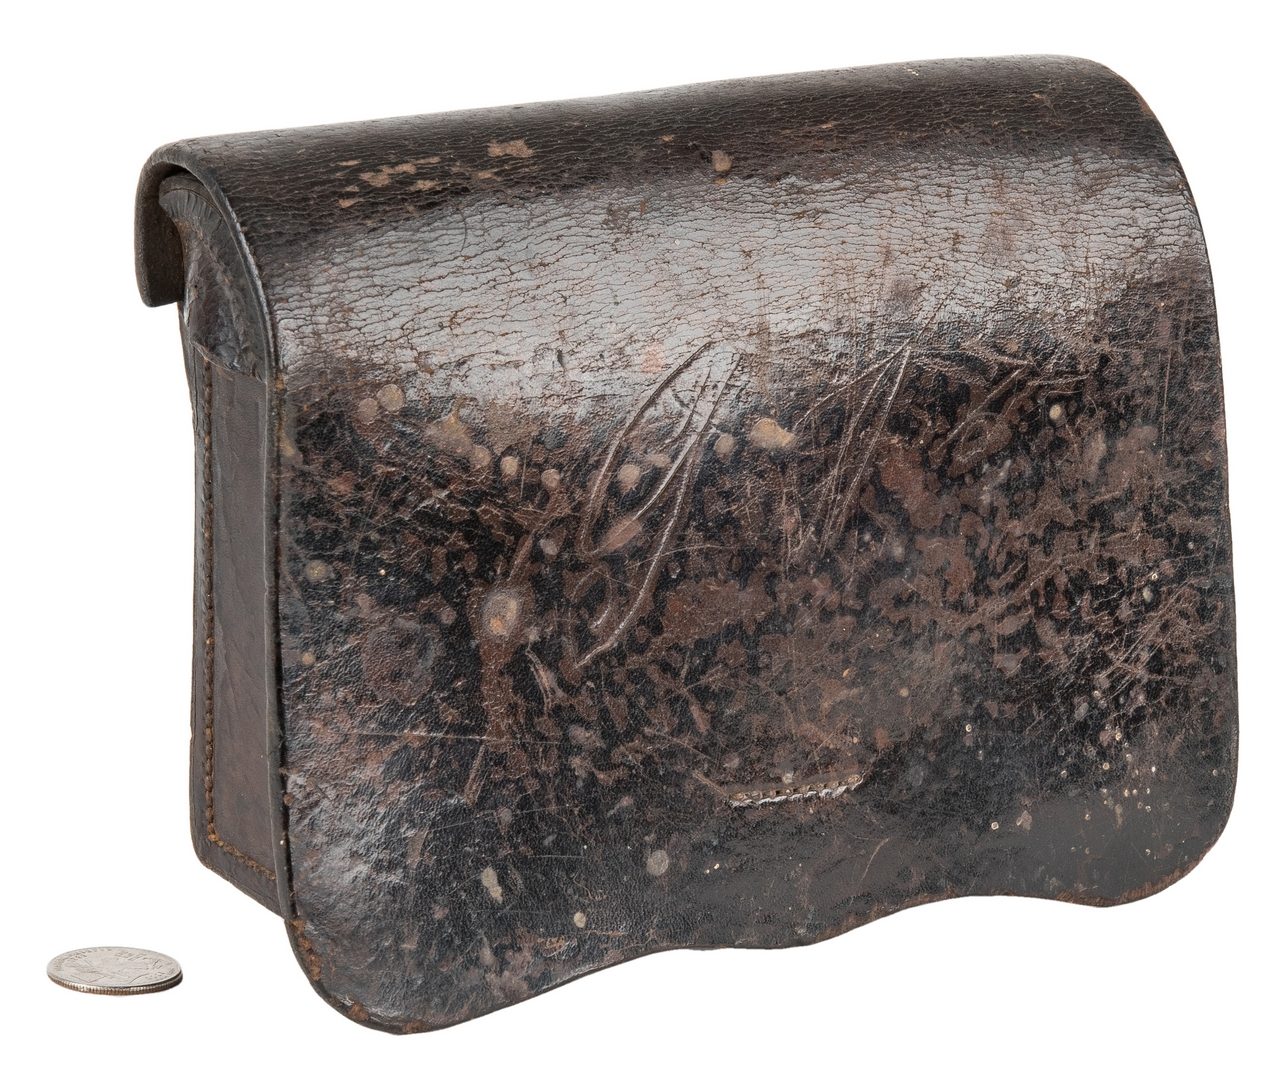 Lot 277: Confederate Baton Rouge, LA Arsenal Model 1855 Leather Cartridge Box